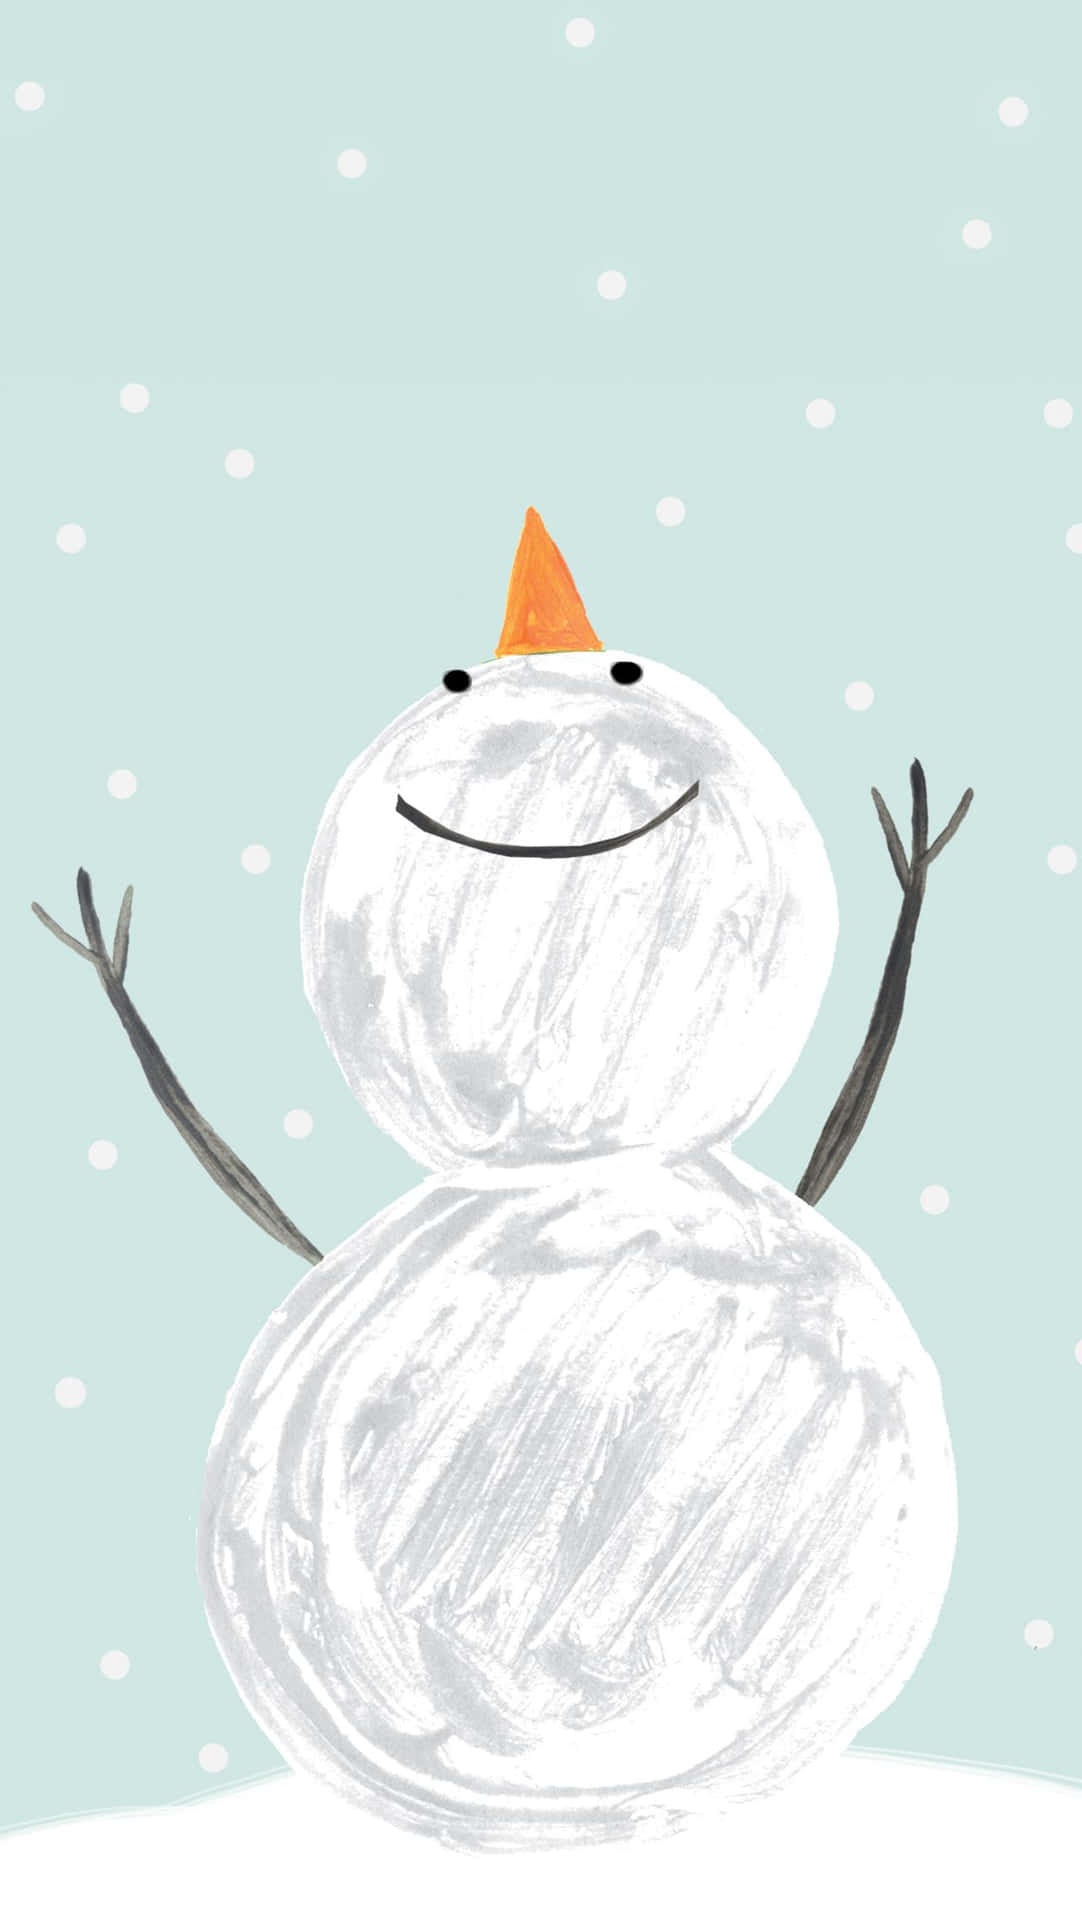 Happy Snowman Illustration Wallpaper